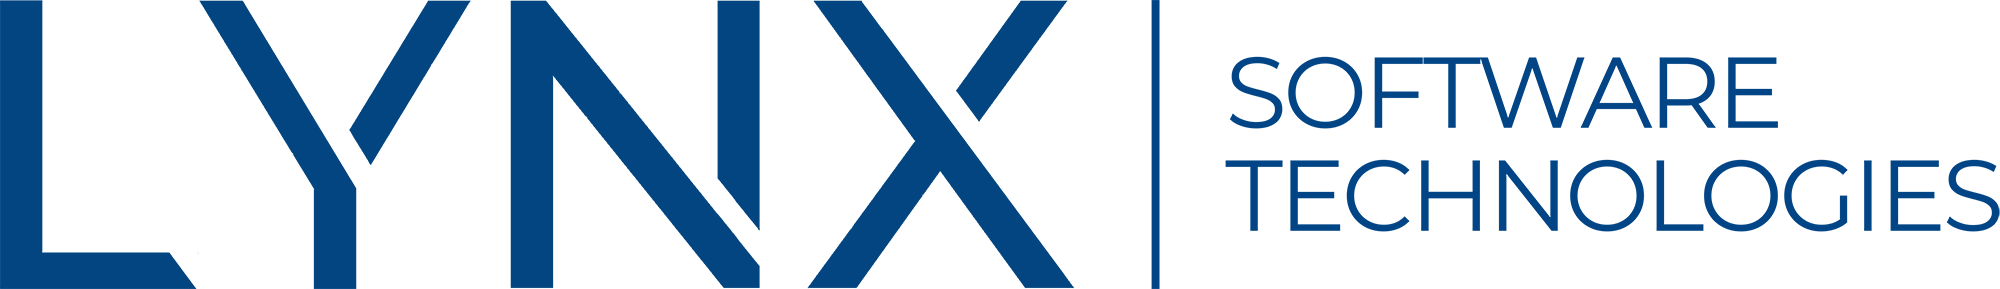 LYNX Software Technologies Logo